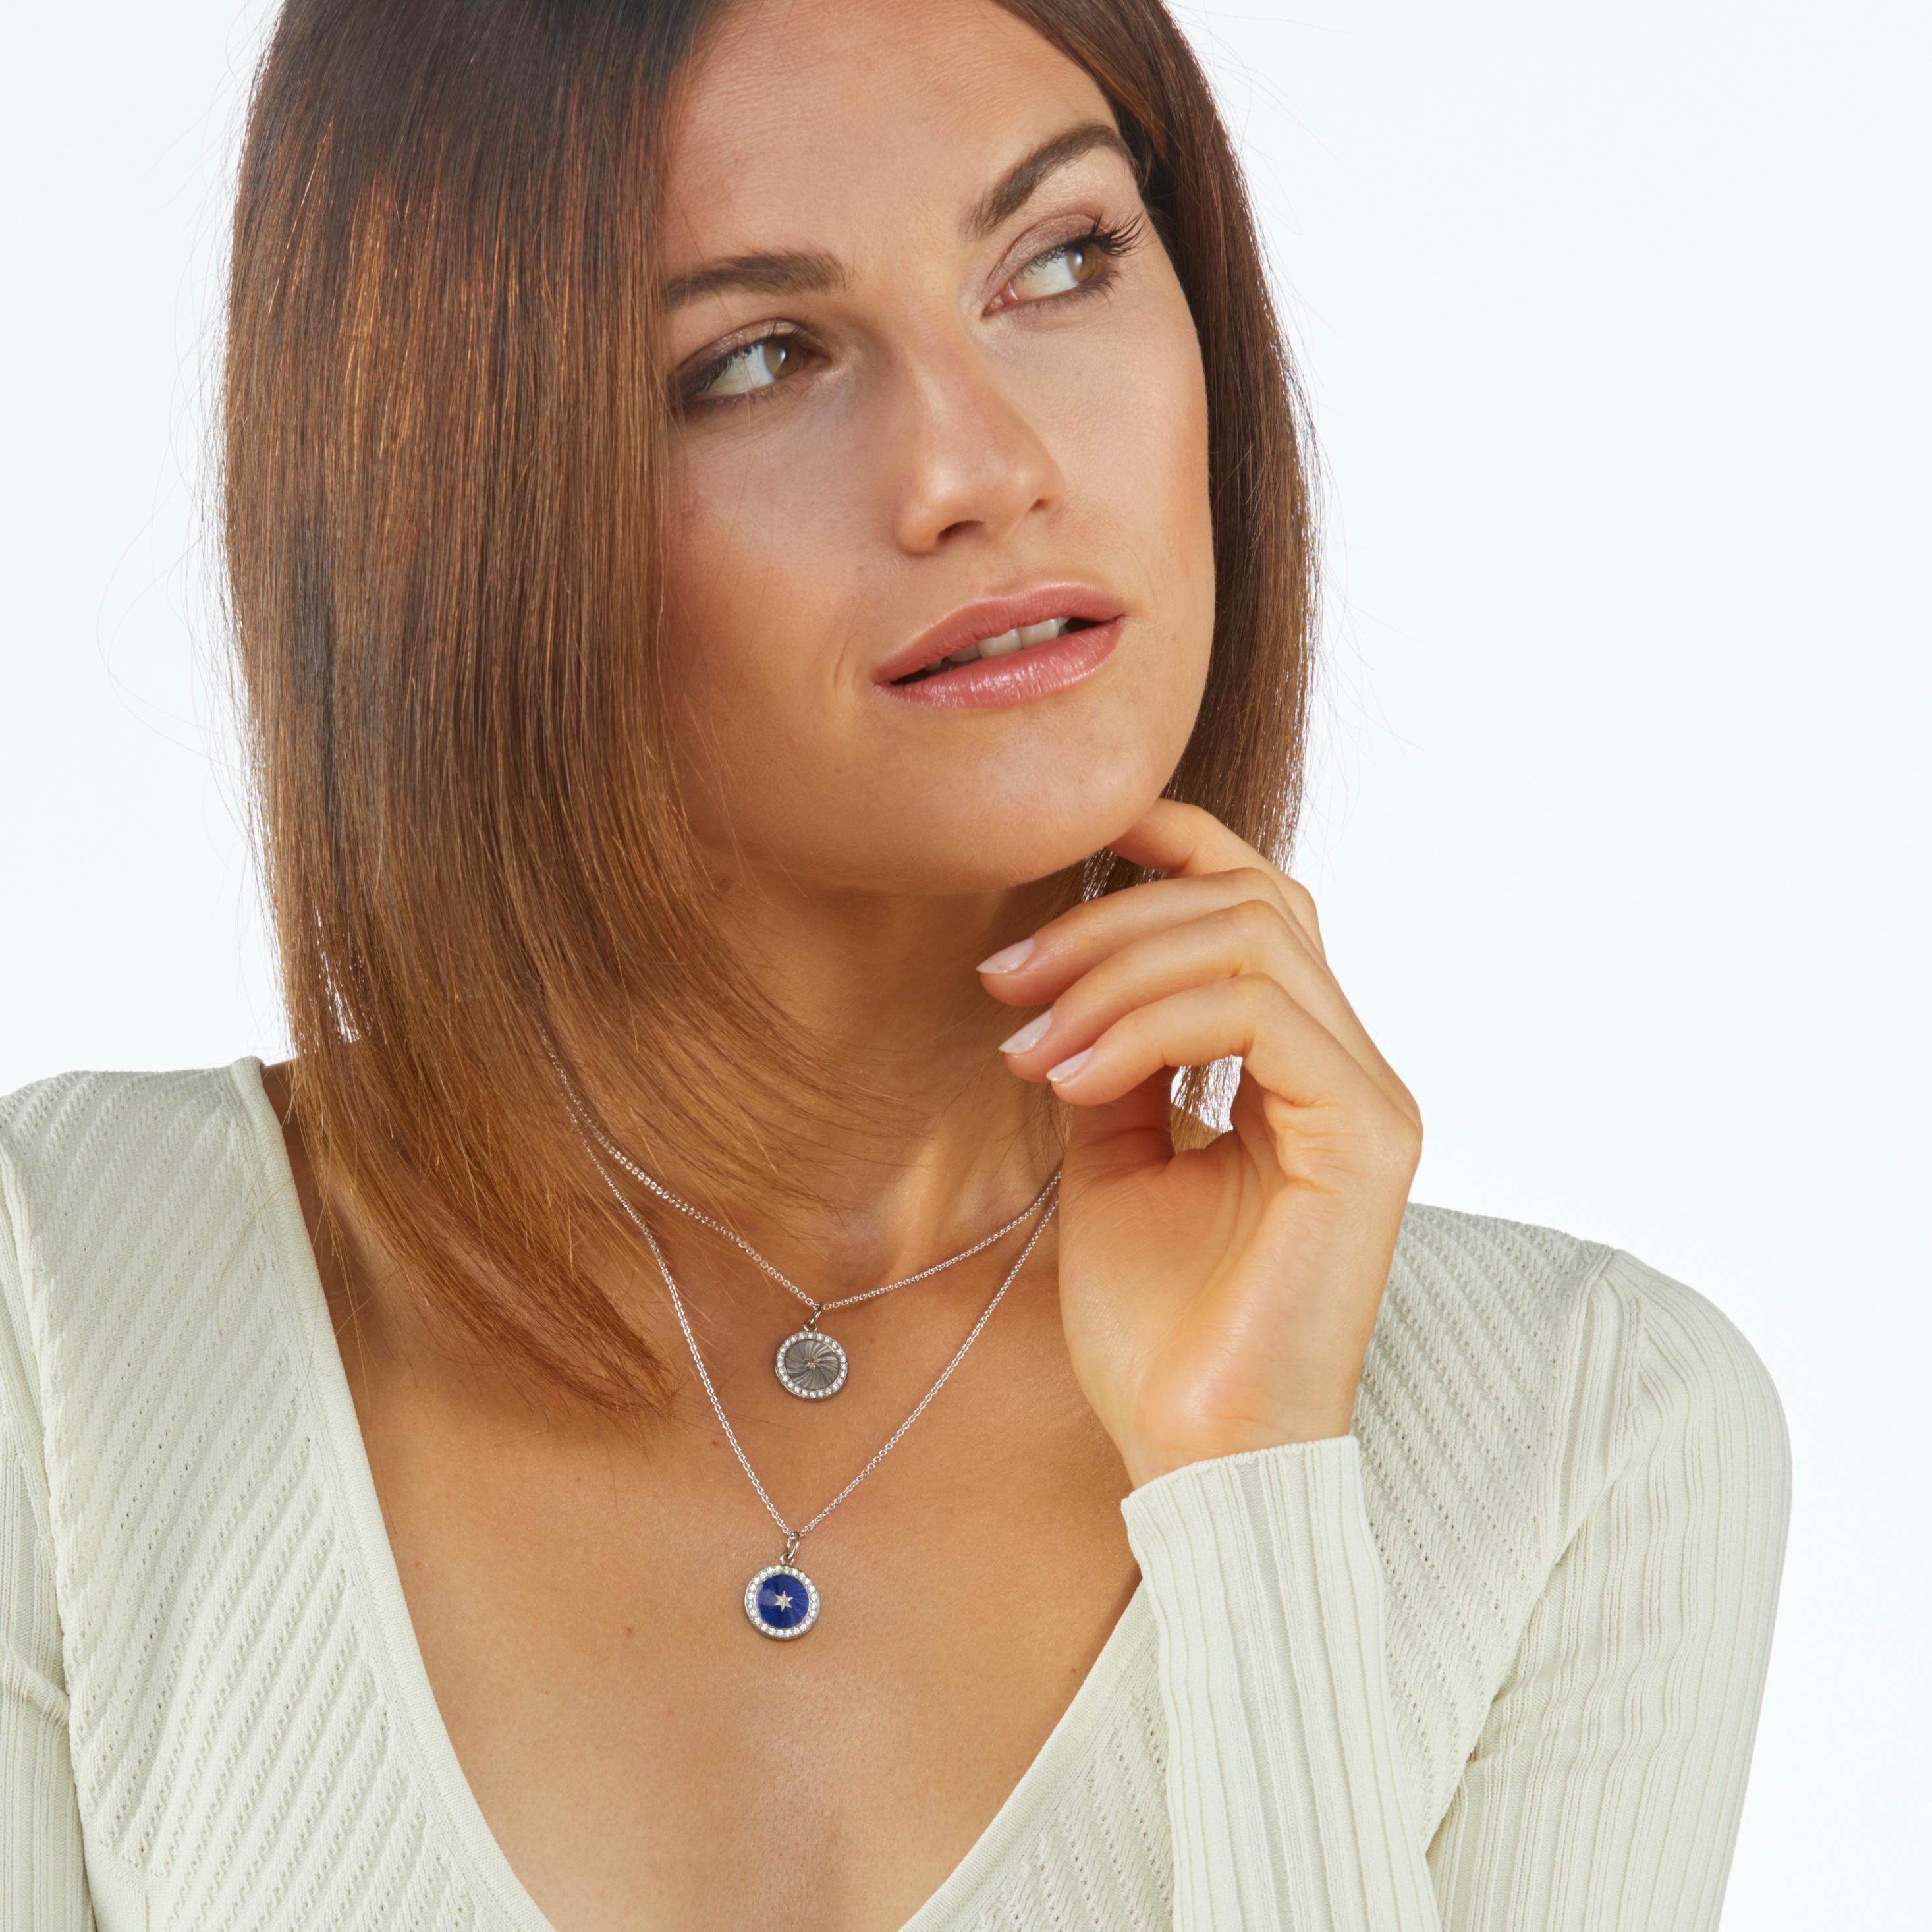 Pendant Necklace with Star 18k White Gold Blue Enamel 24 Diamonds 0.36 ct G VS In New Condition For Sale In Pforzheim, DE